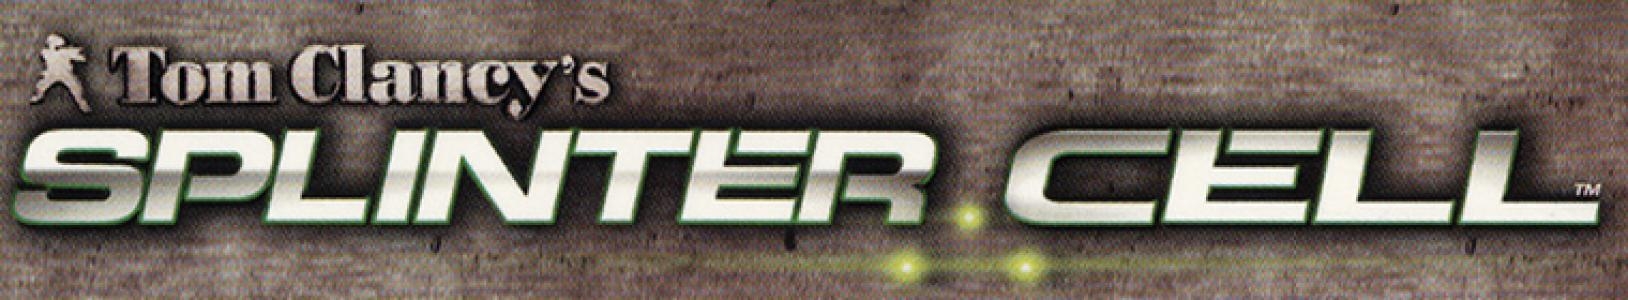 Tom Clancy's Splinter Cell banner